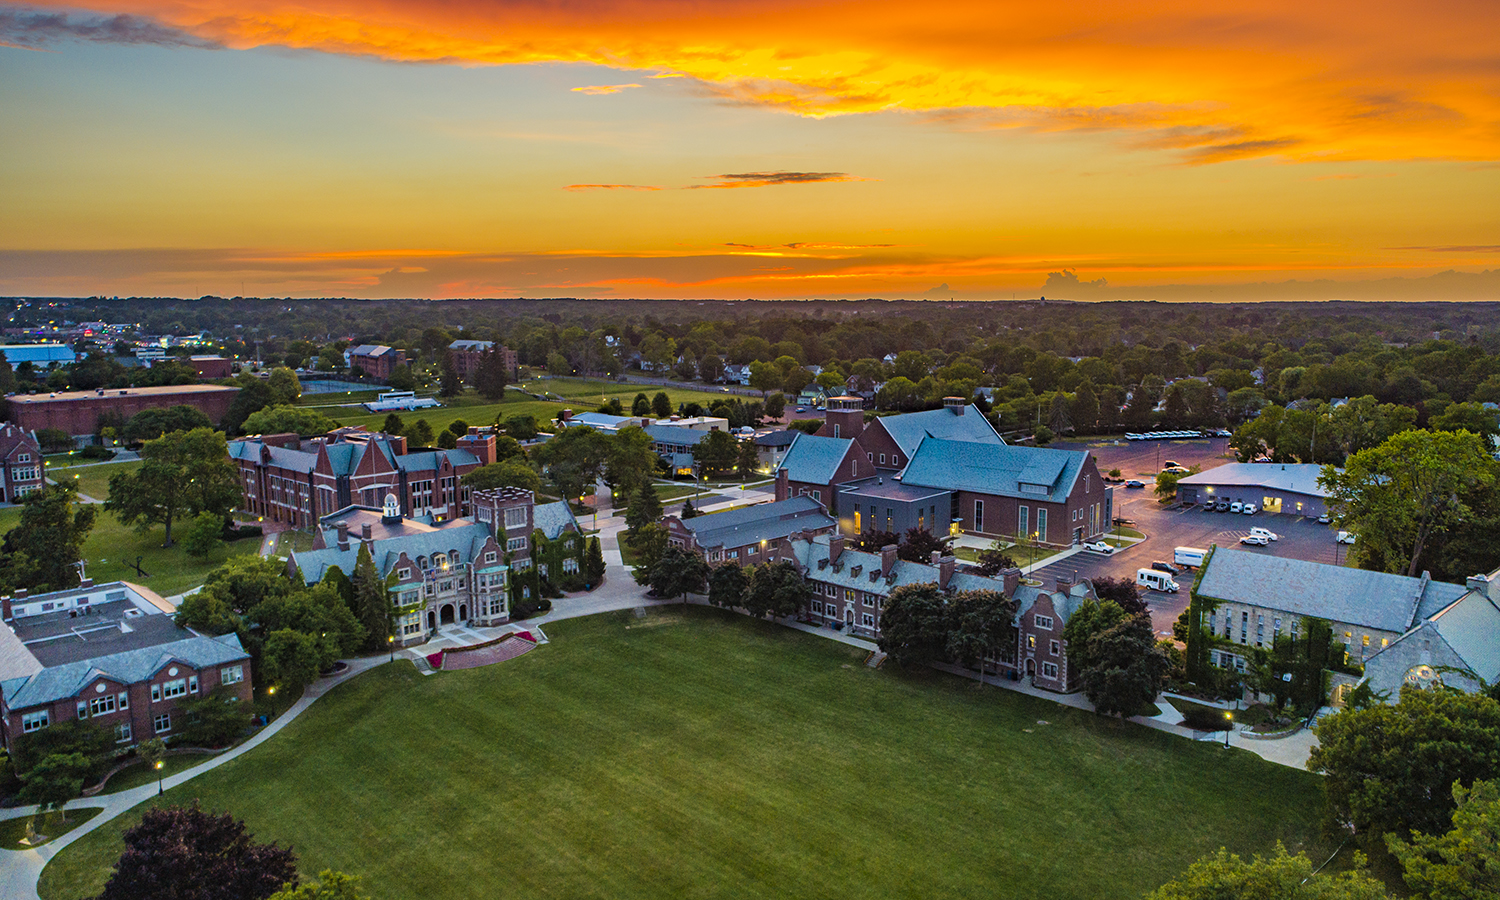 sunset over campus